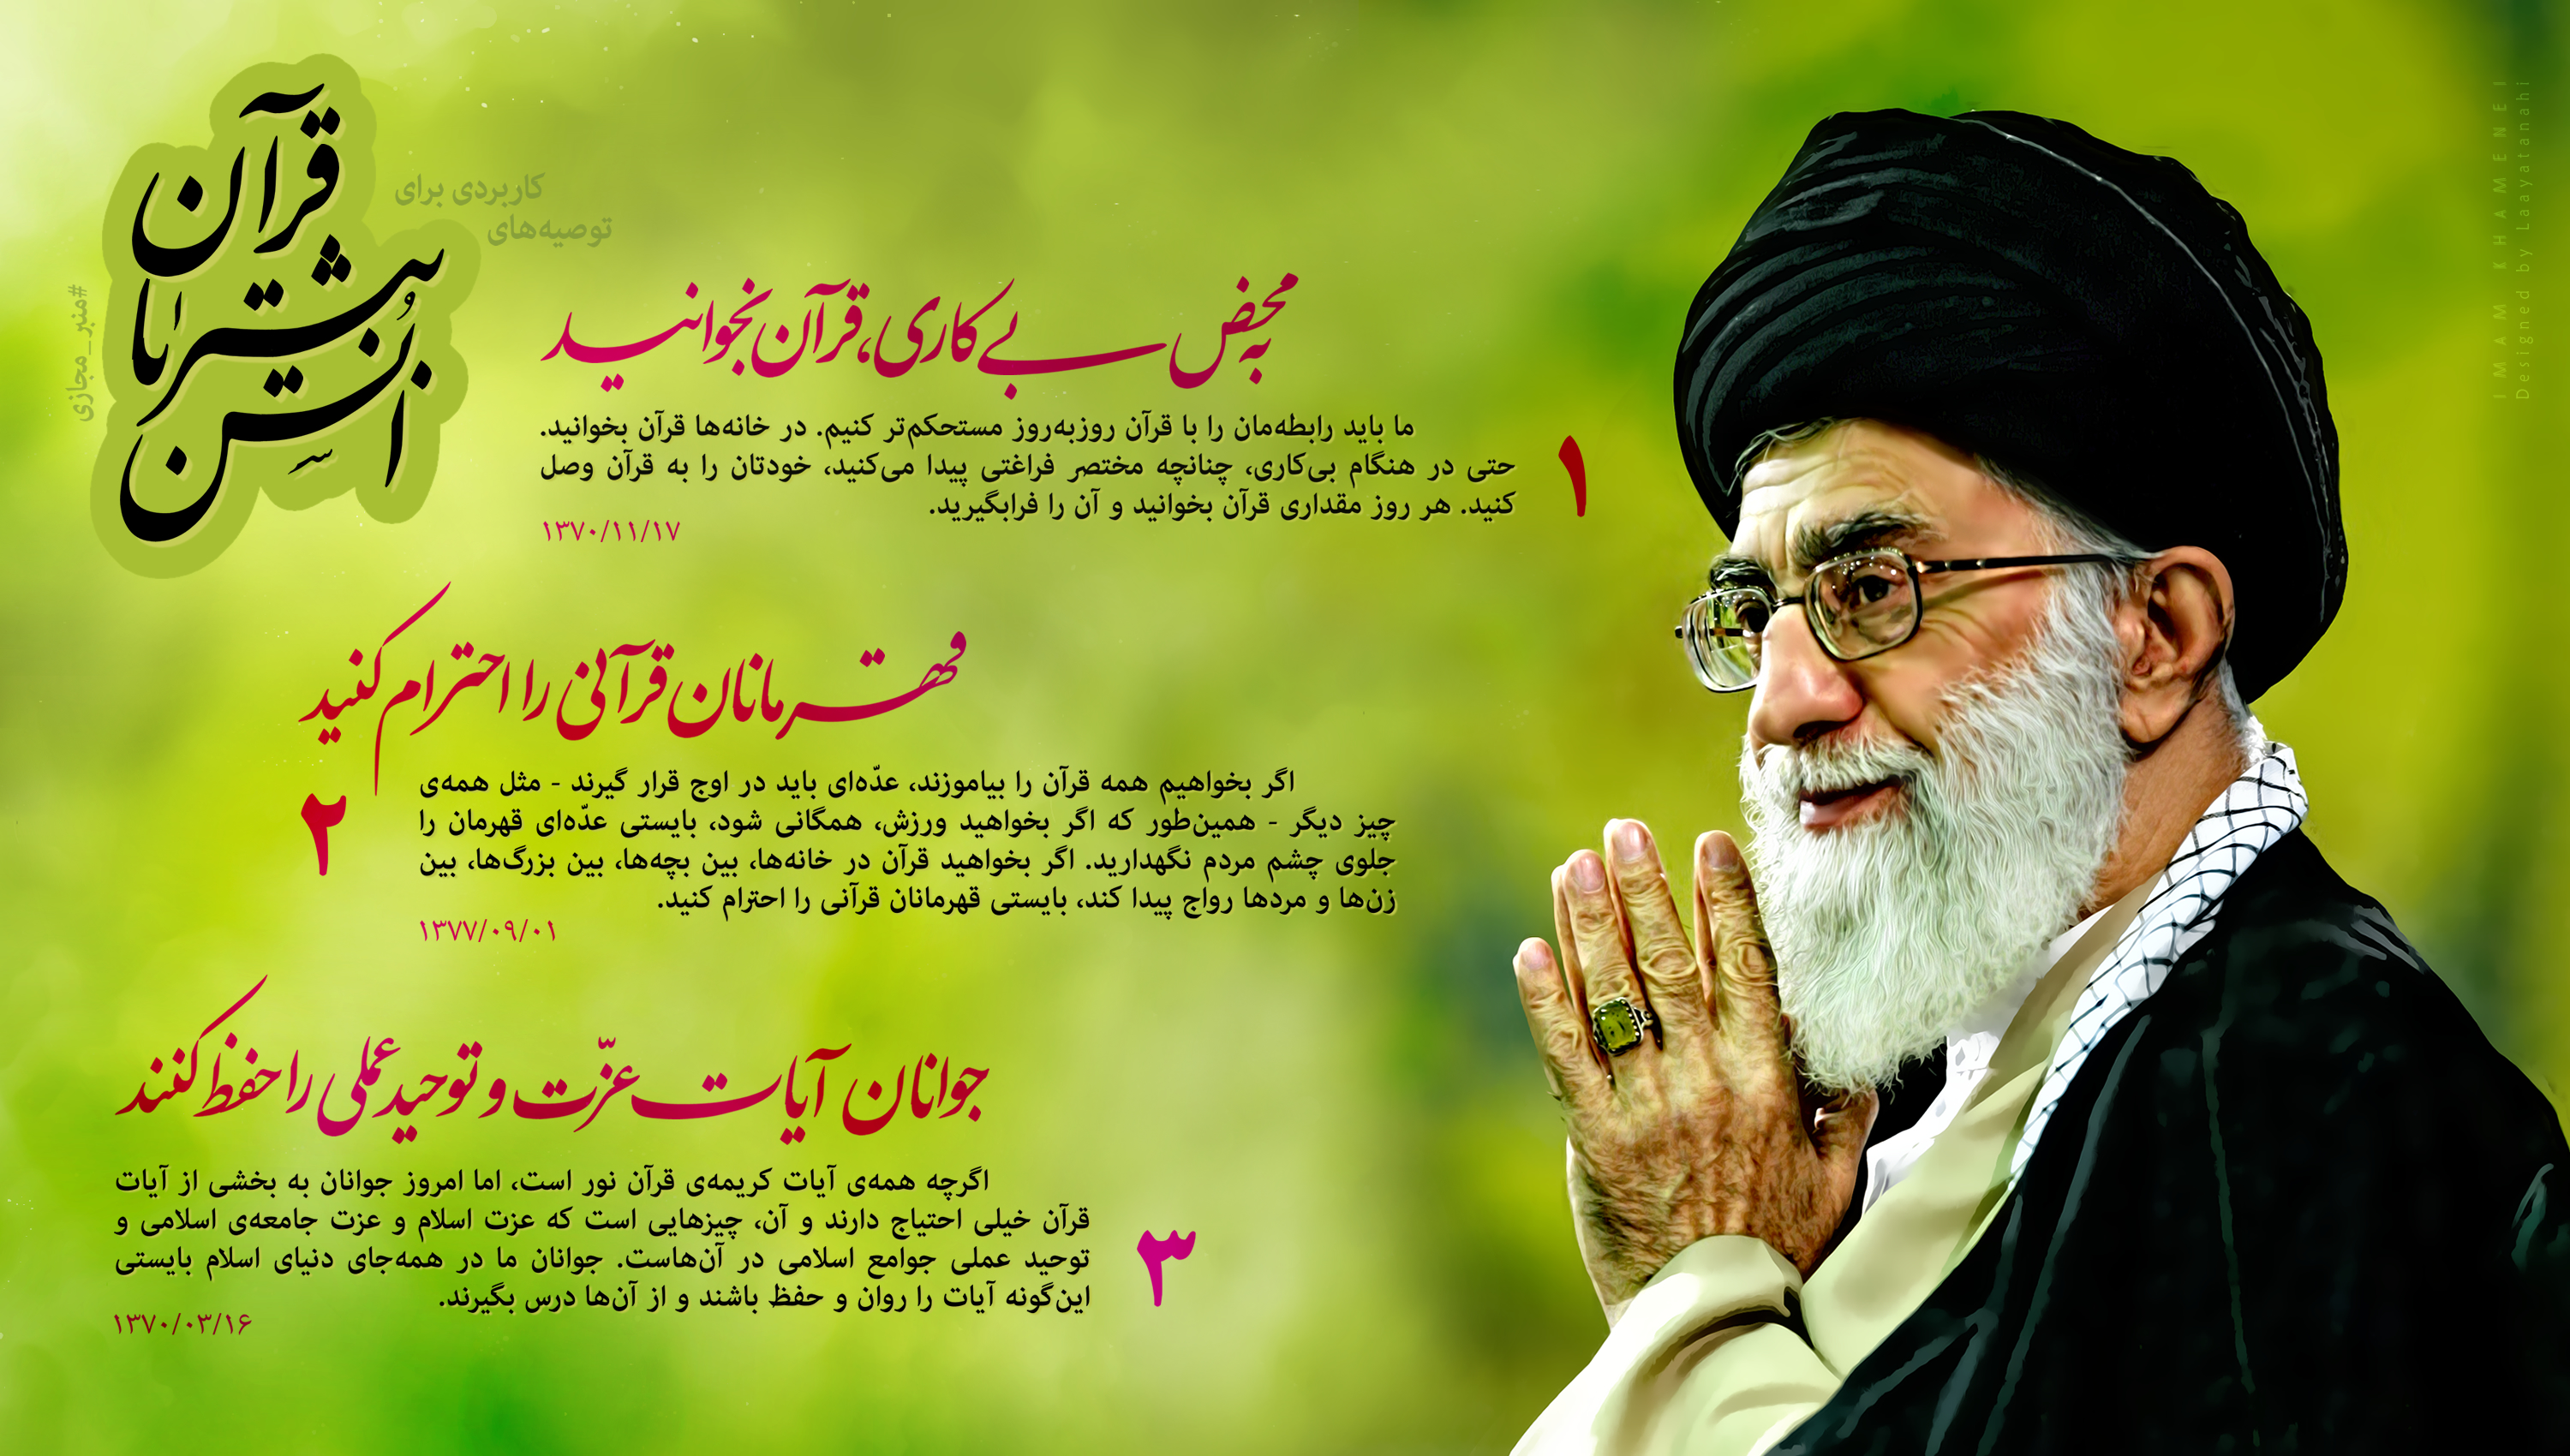 info_ImamKhamenei_Quran02.jpg